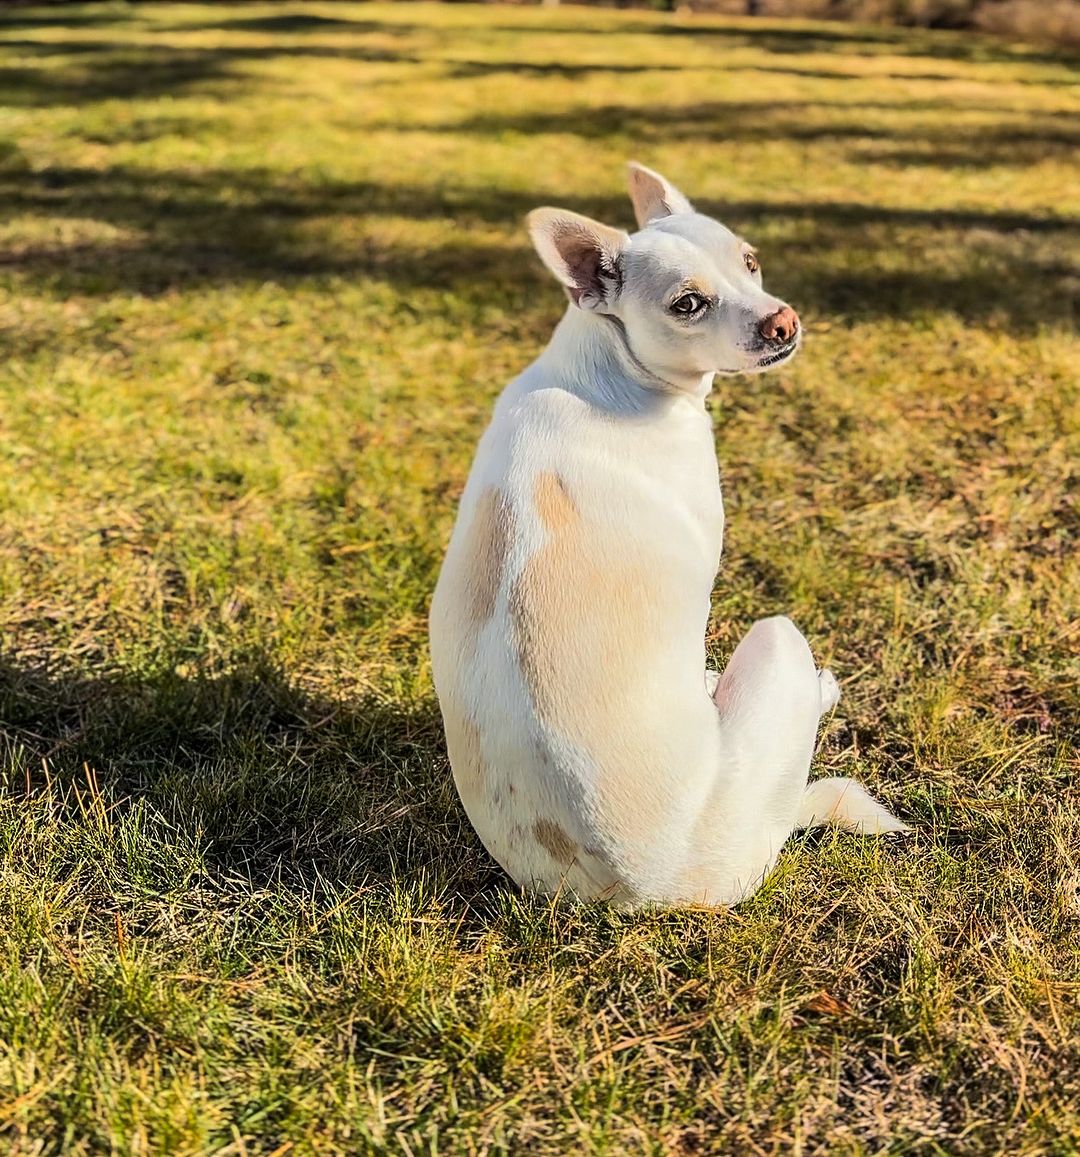 White deaf dog sitting on a grass